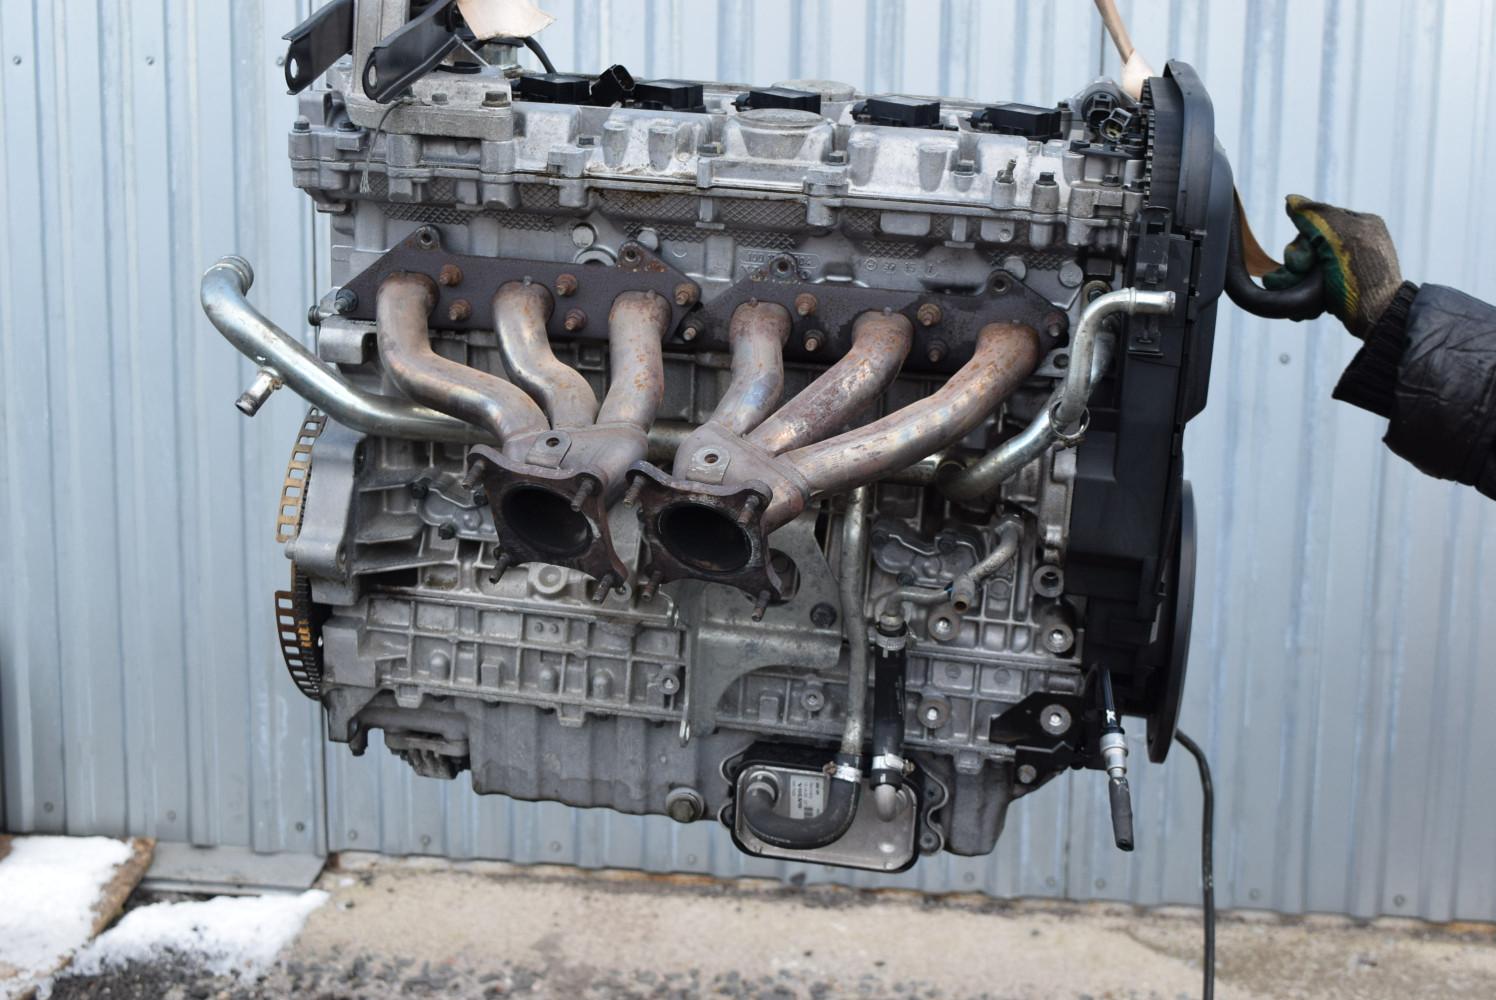 Двигатель вольво 2.9. ДВС Volvo 2.9. Вольво s80 3.2 двигатель. Двигатель Вольво s80 2.9. Volvo s80 двигатель 2.9.